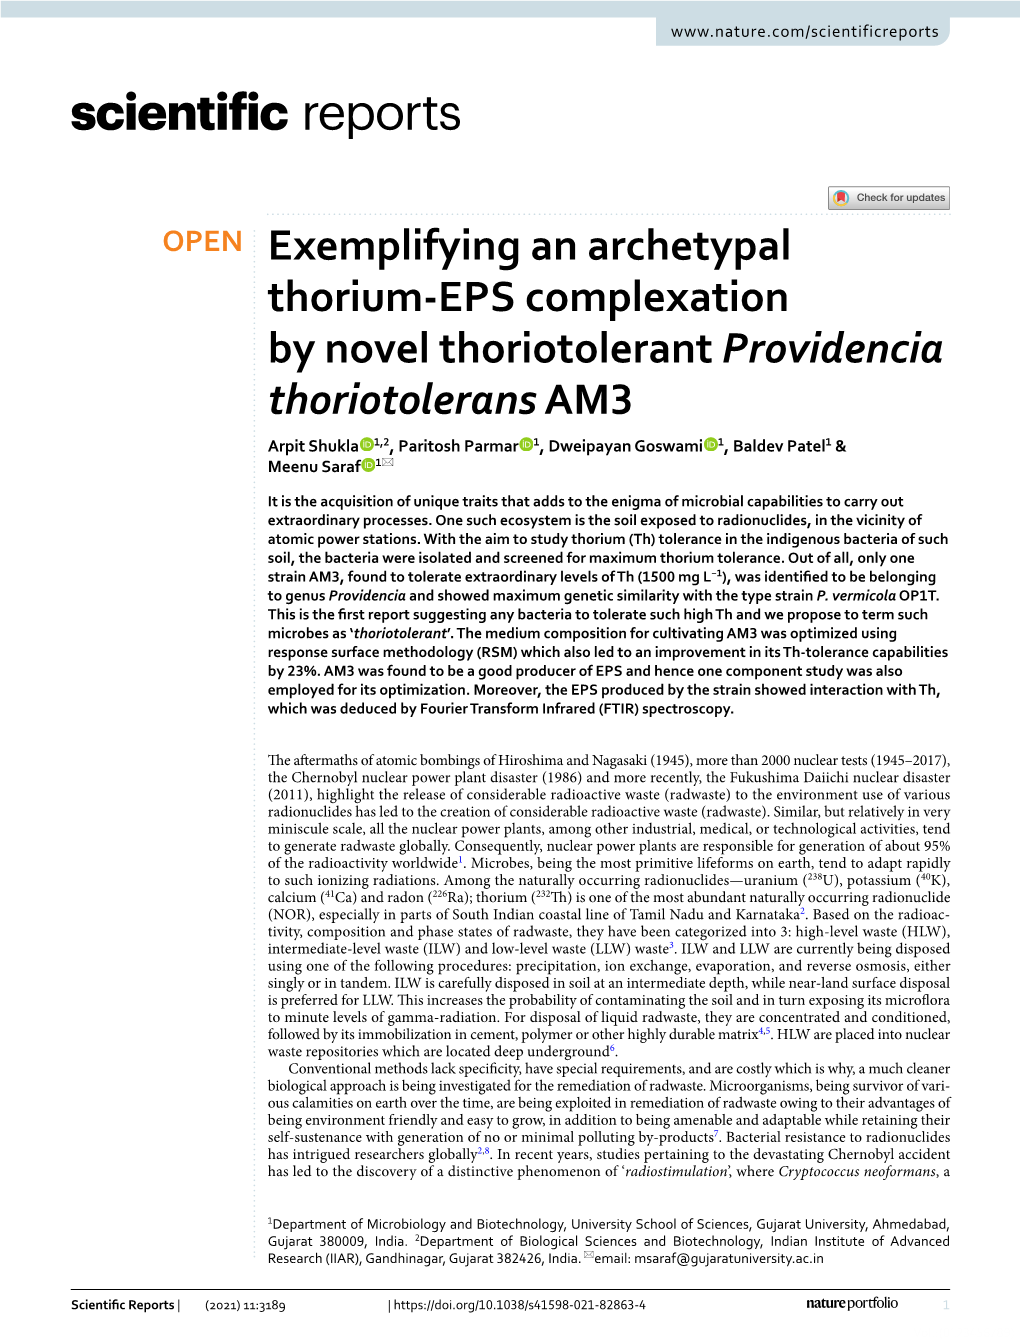 Exemplifying an Archetypal Thorium-EPS Complexation by Novel Thoriotolerant Providencia Thoriotolerans